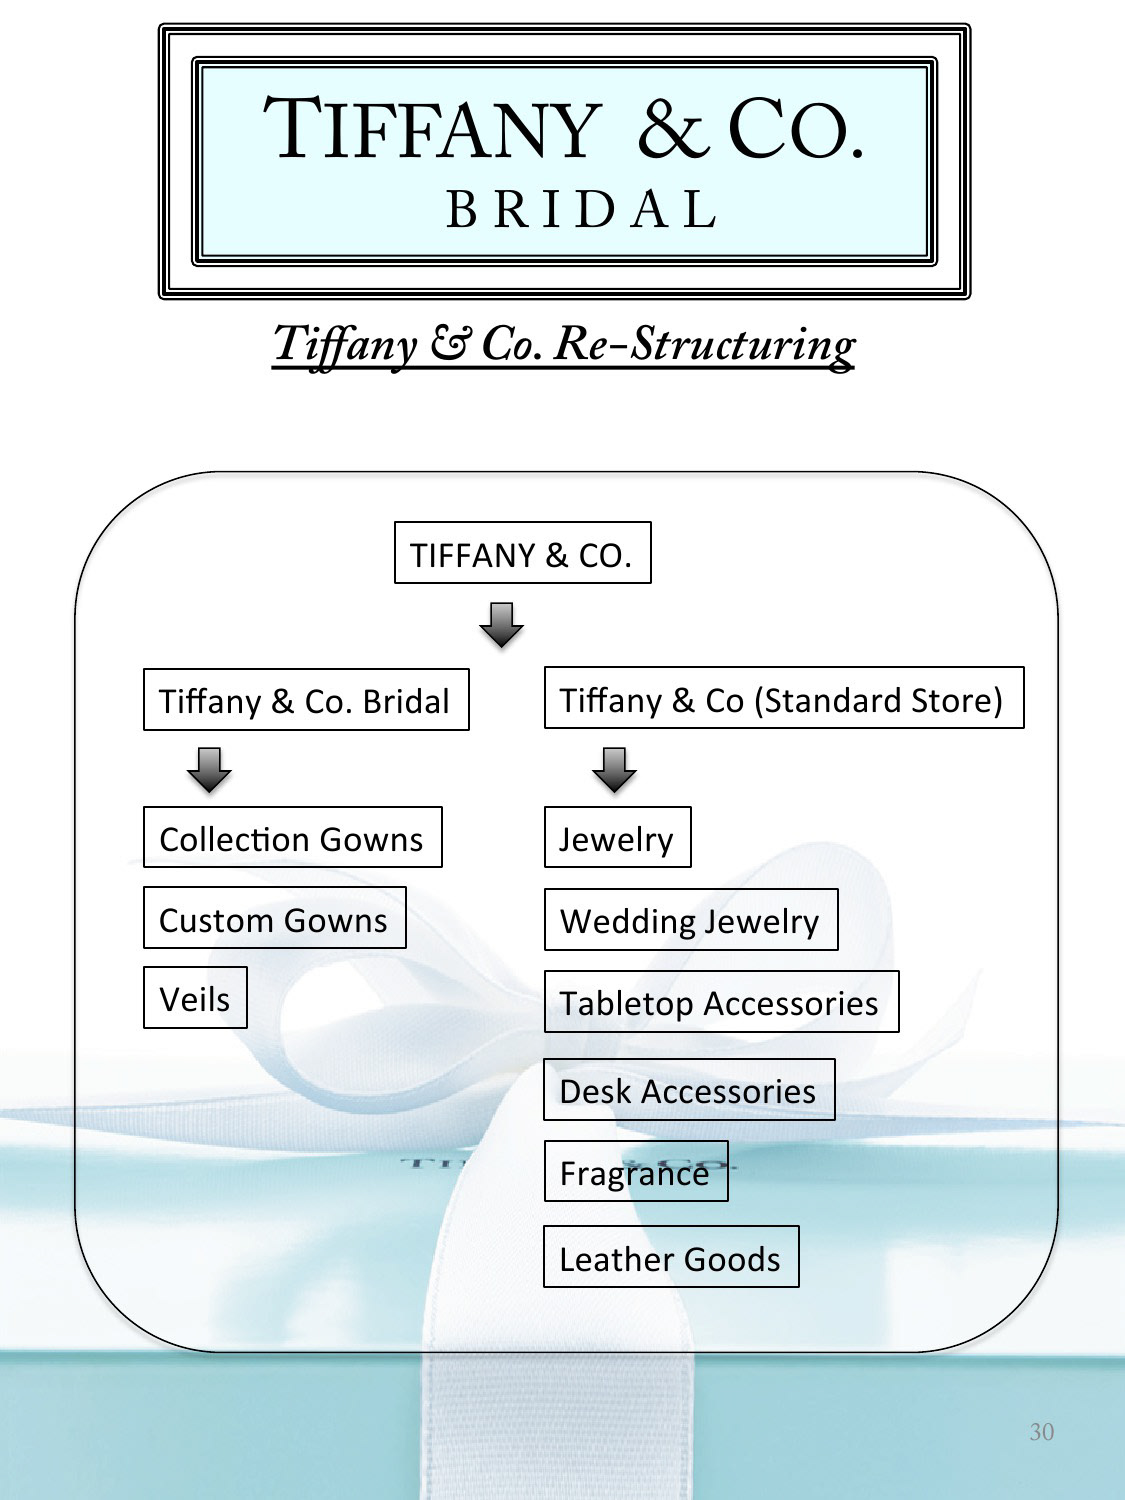 danamarieburmeister luxury newbranddevelopment Tiffany&Co bridal